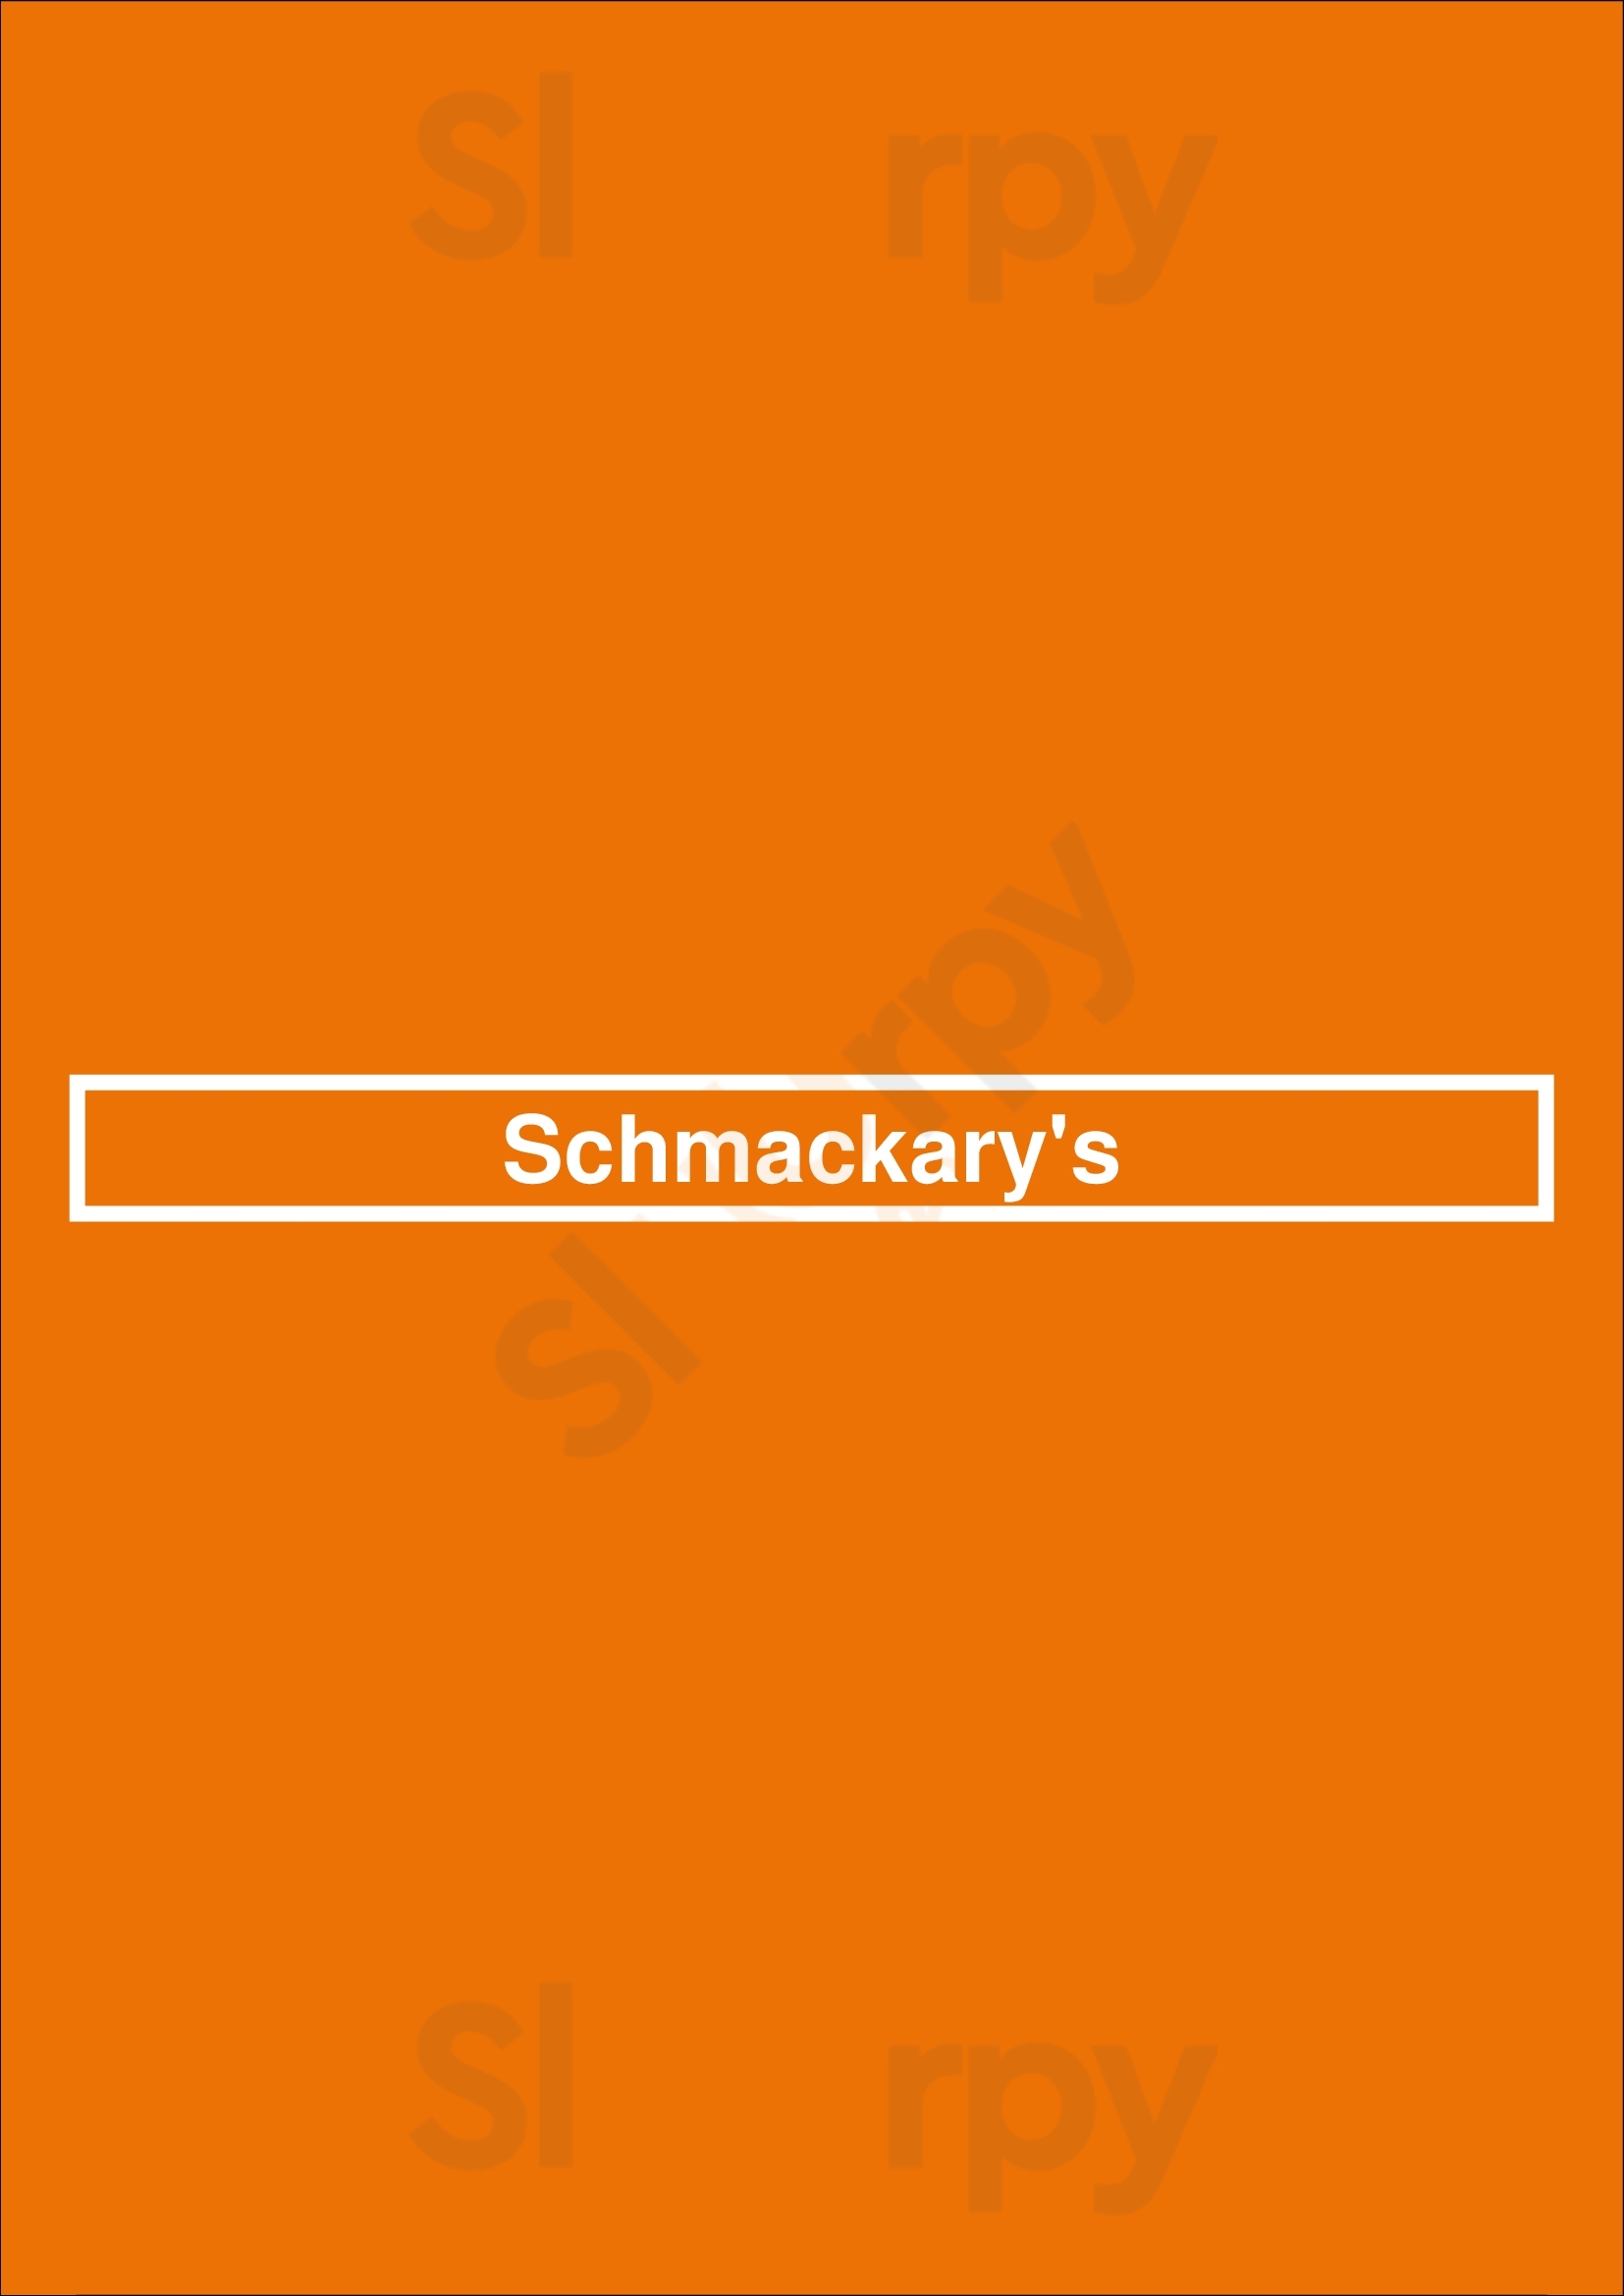 Schmackary's New York City Menu - 1